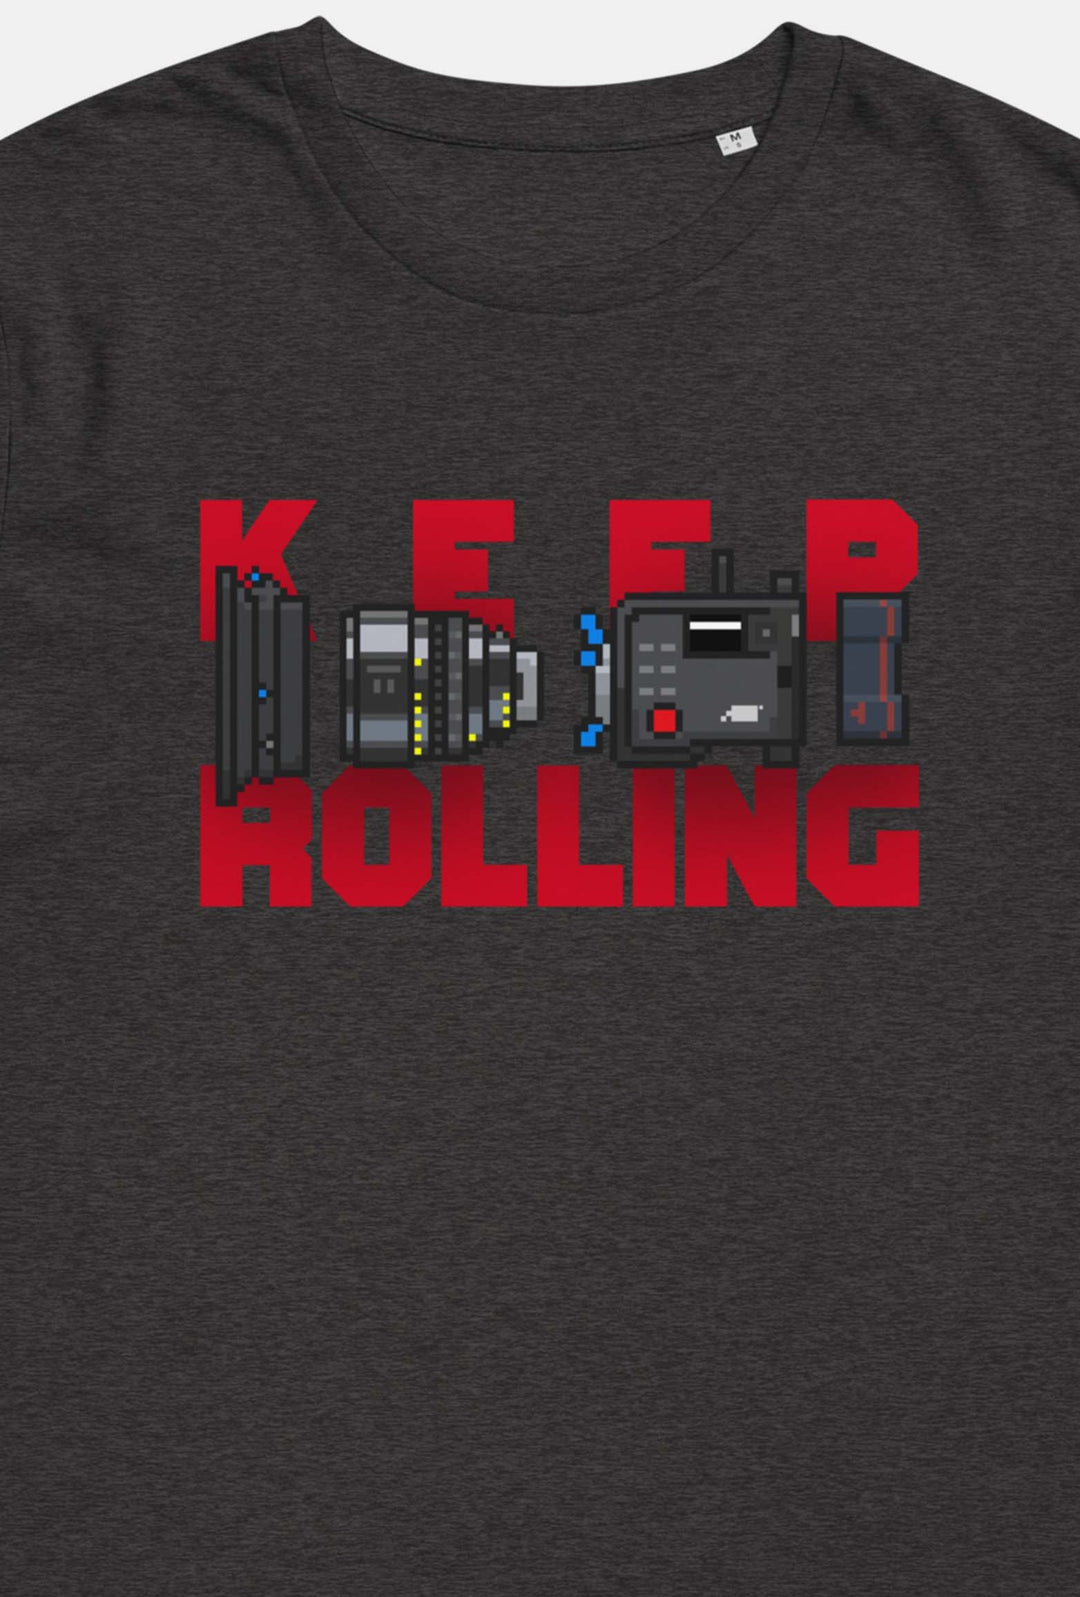 T-Shirt | Keep Rolling